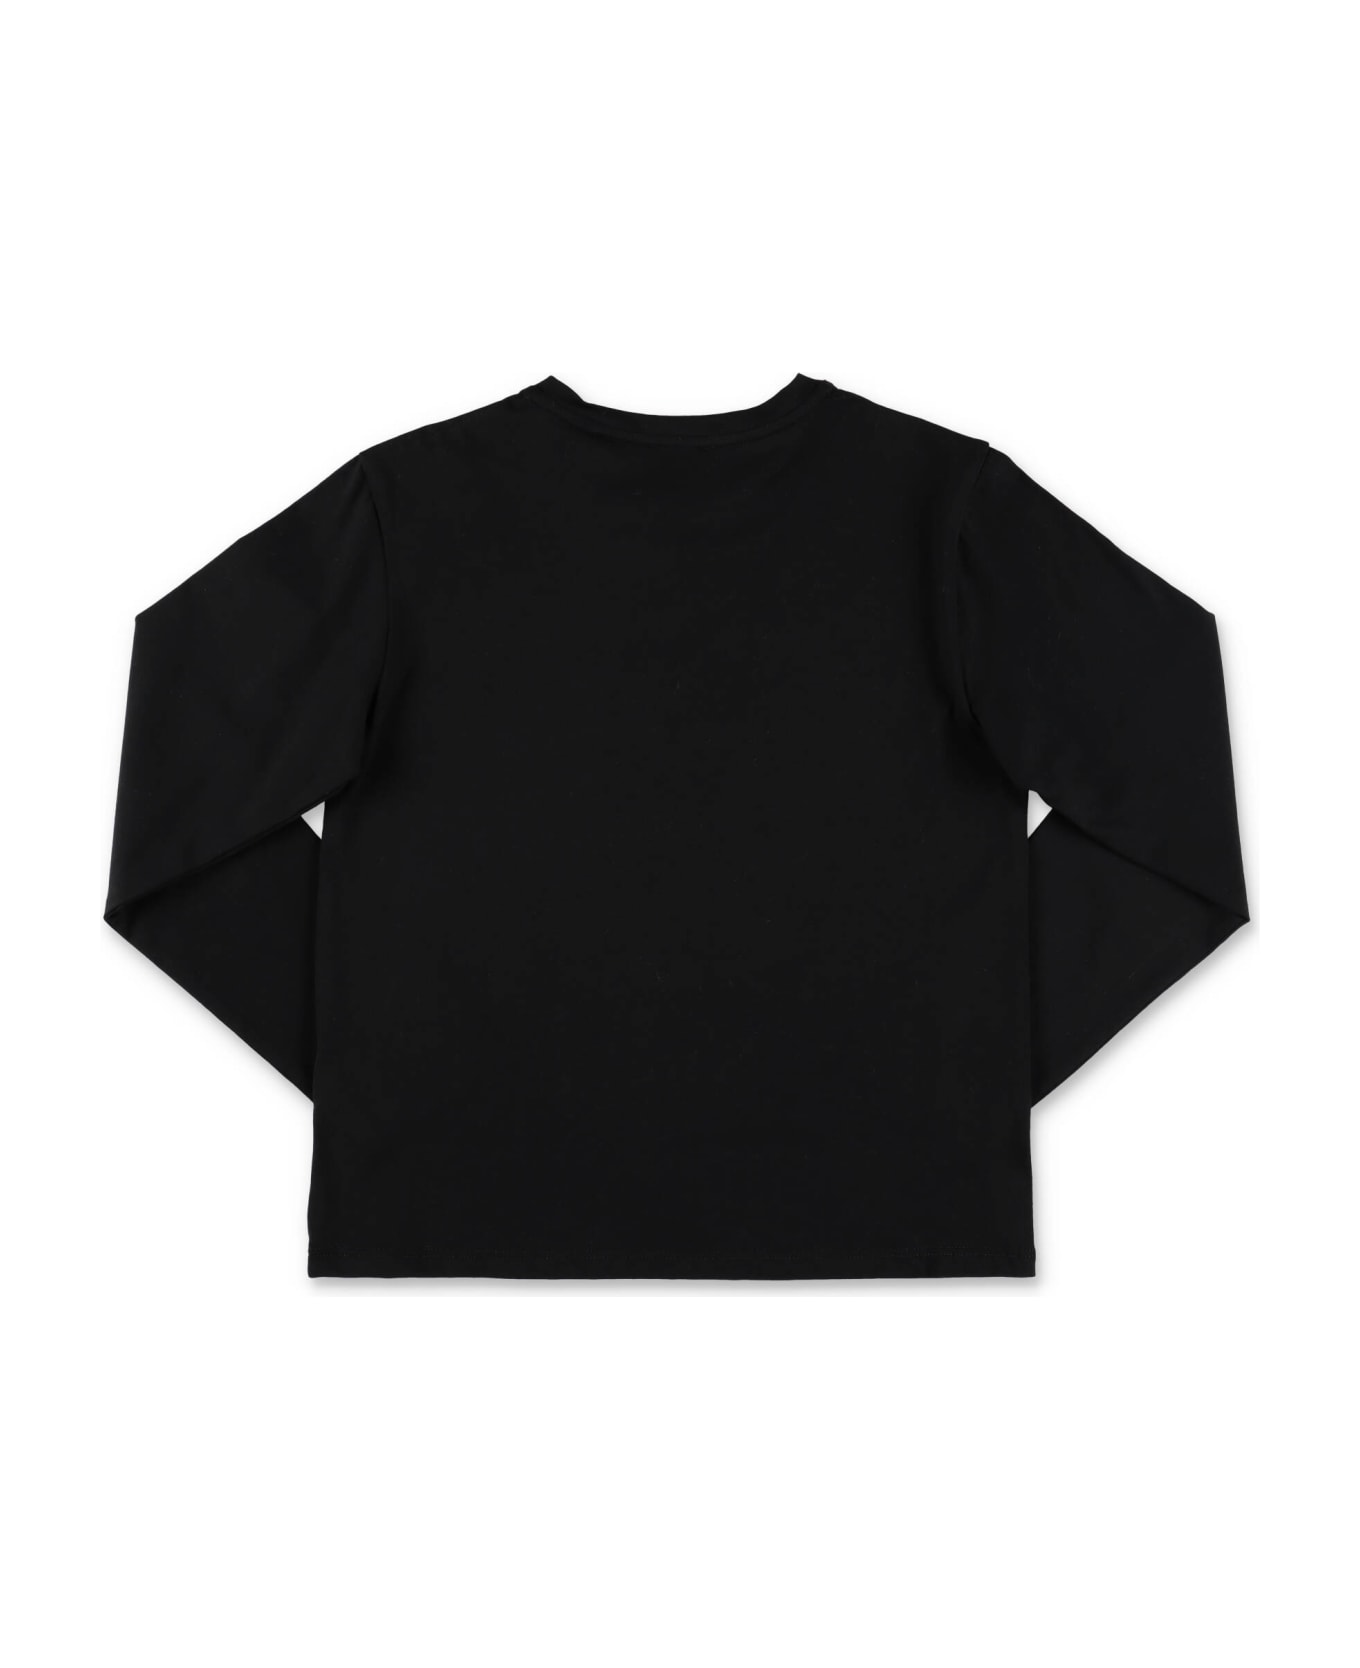 Givenchy X Swarovski T-shirt Nera In Jersey Di Cotone Bambina - Nero